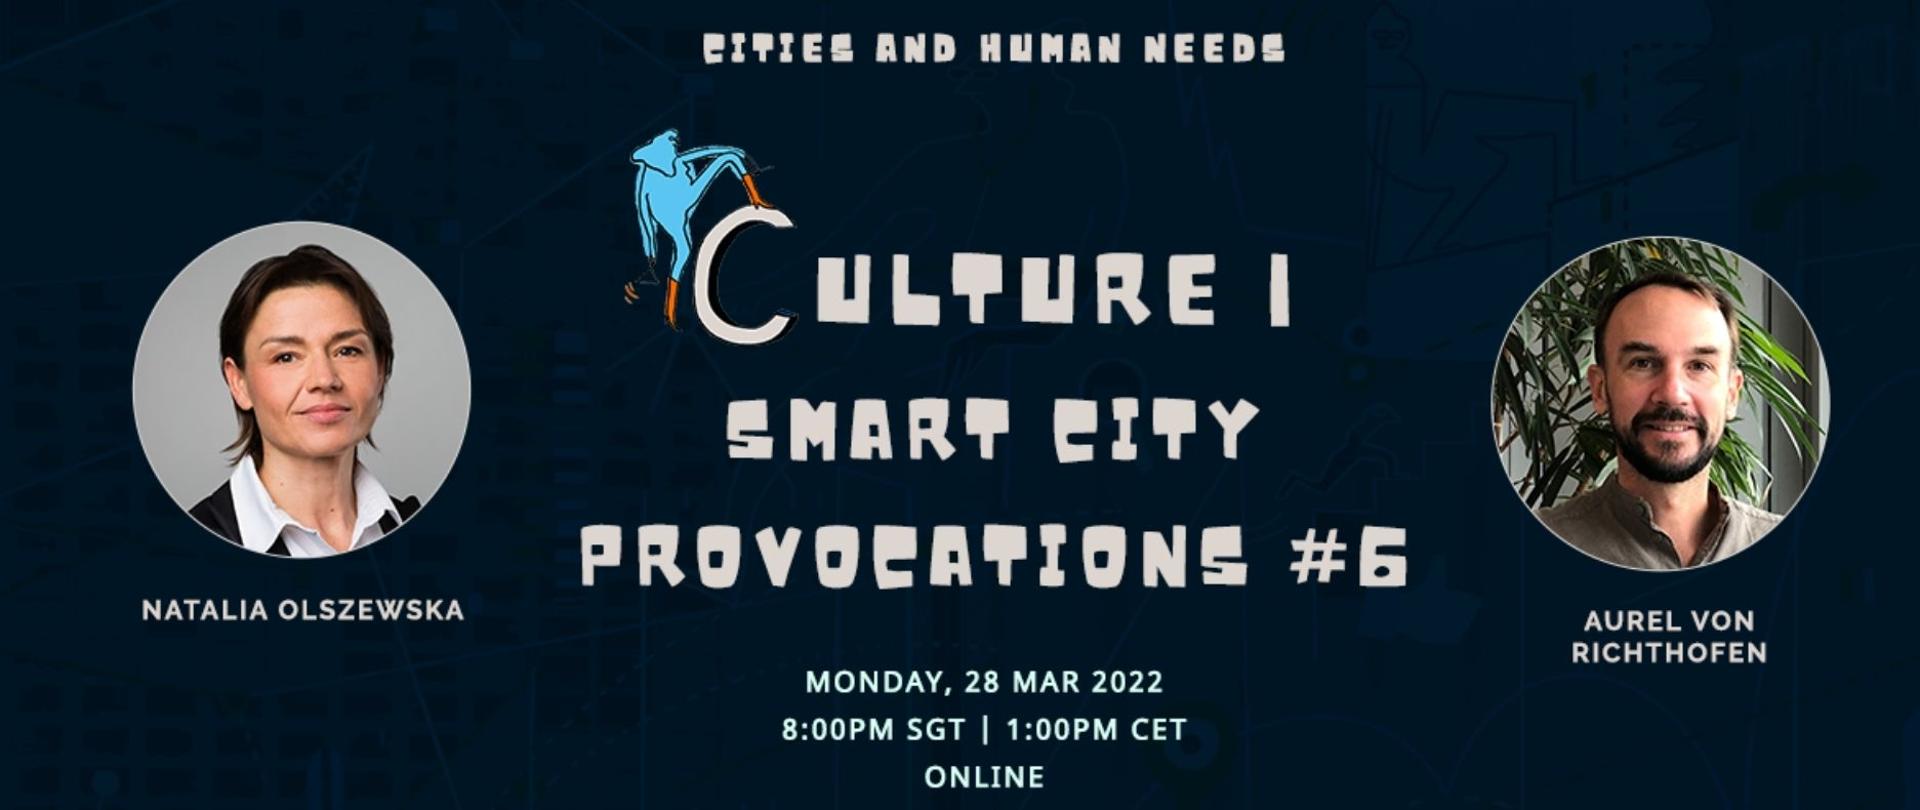 EUNIC Culture & Smart City webinar Cities and Human Needs